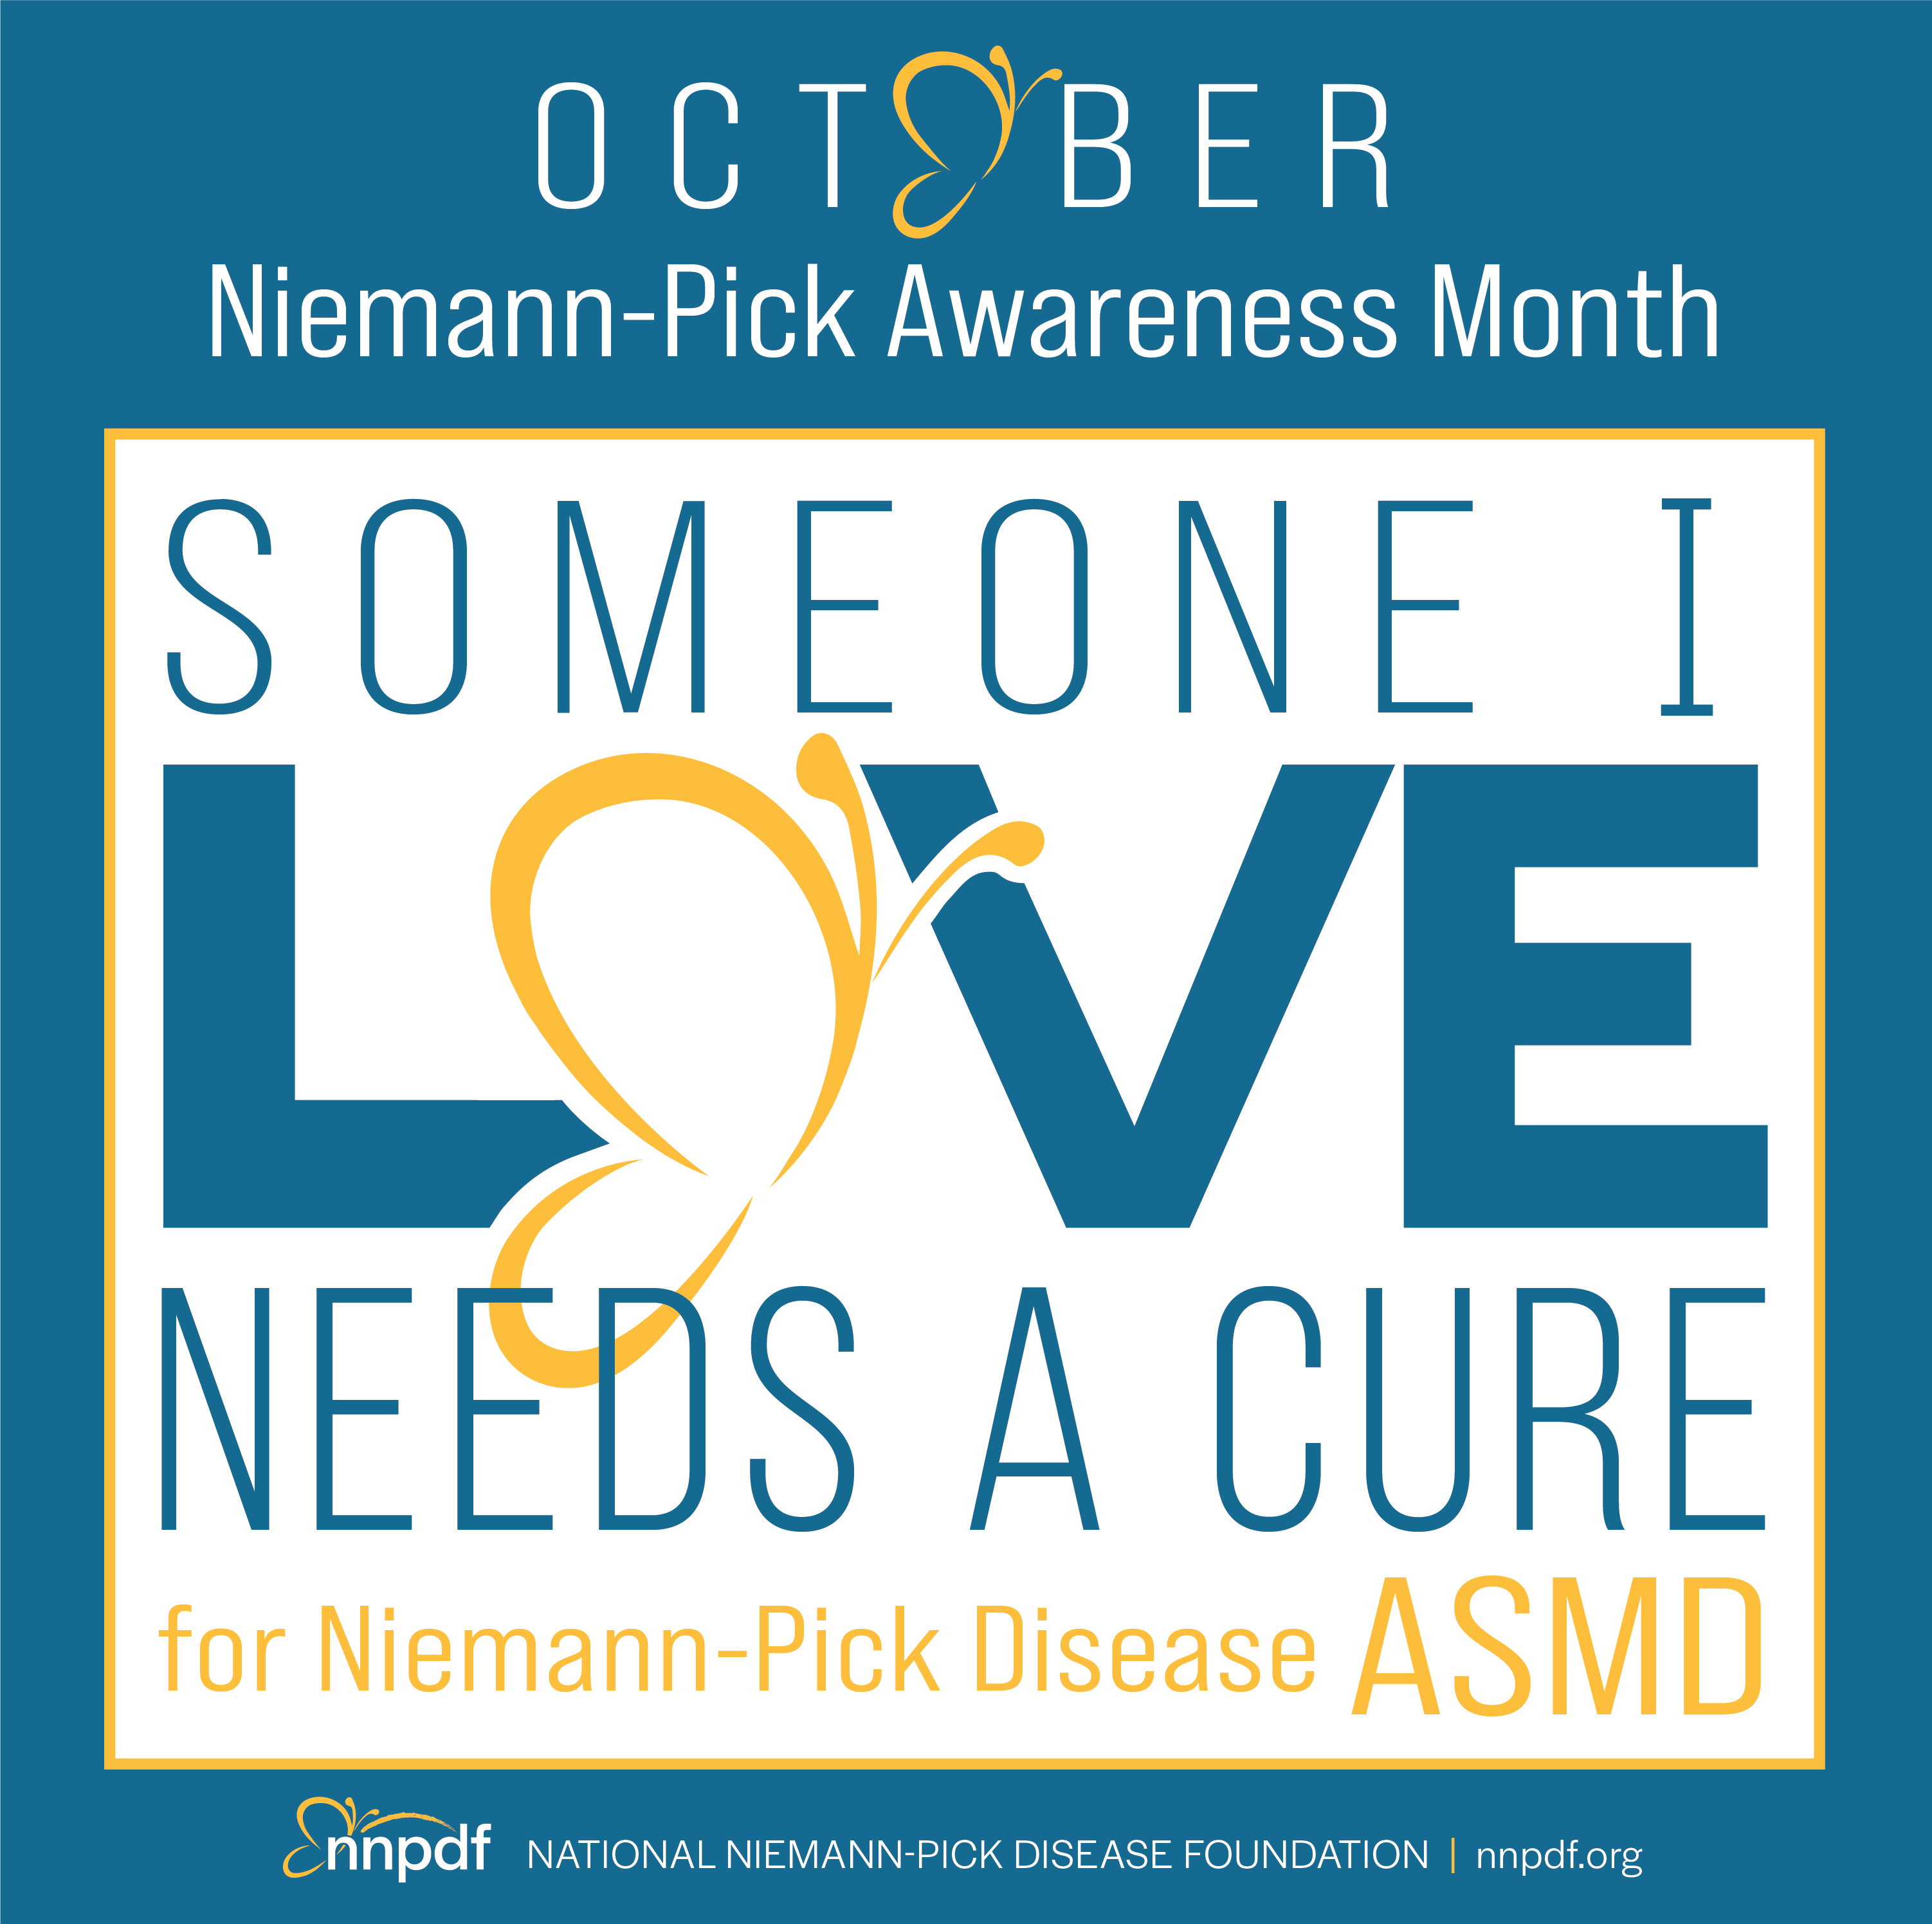 National Niemann-Pick Disease Foundation, Inc. - October is